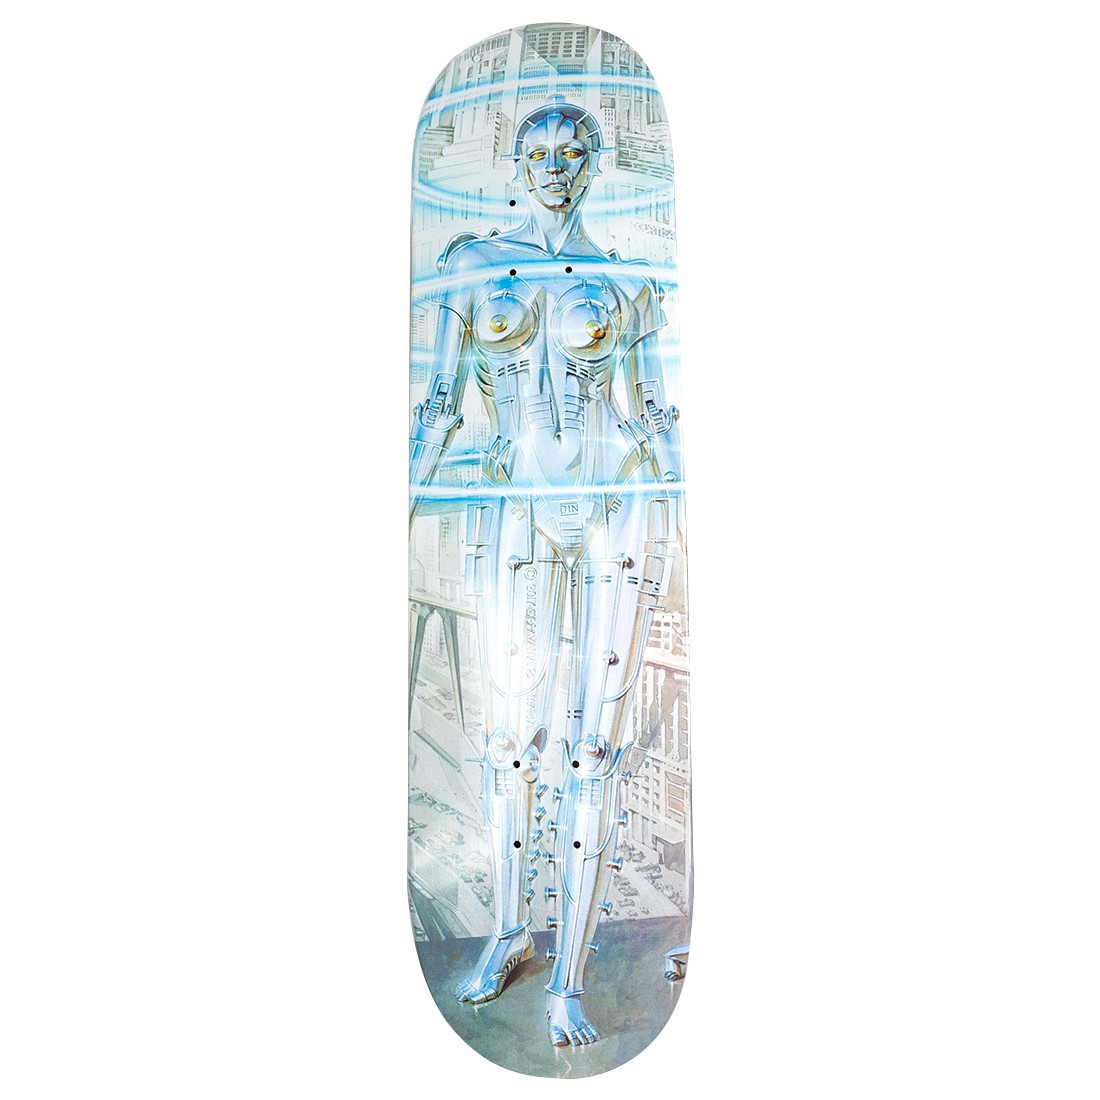 Medicom x SYNC x Hajime Sorayama Men Robot Skateboard Deck (silver)